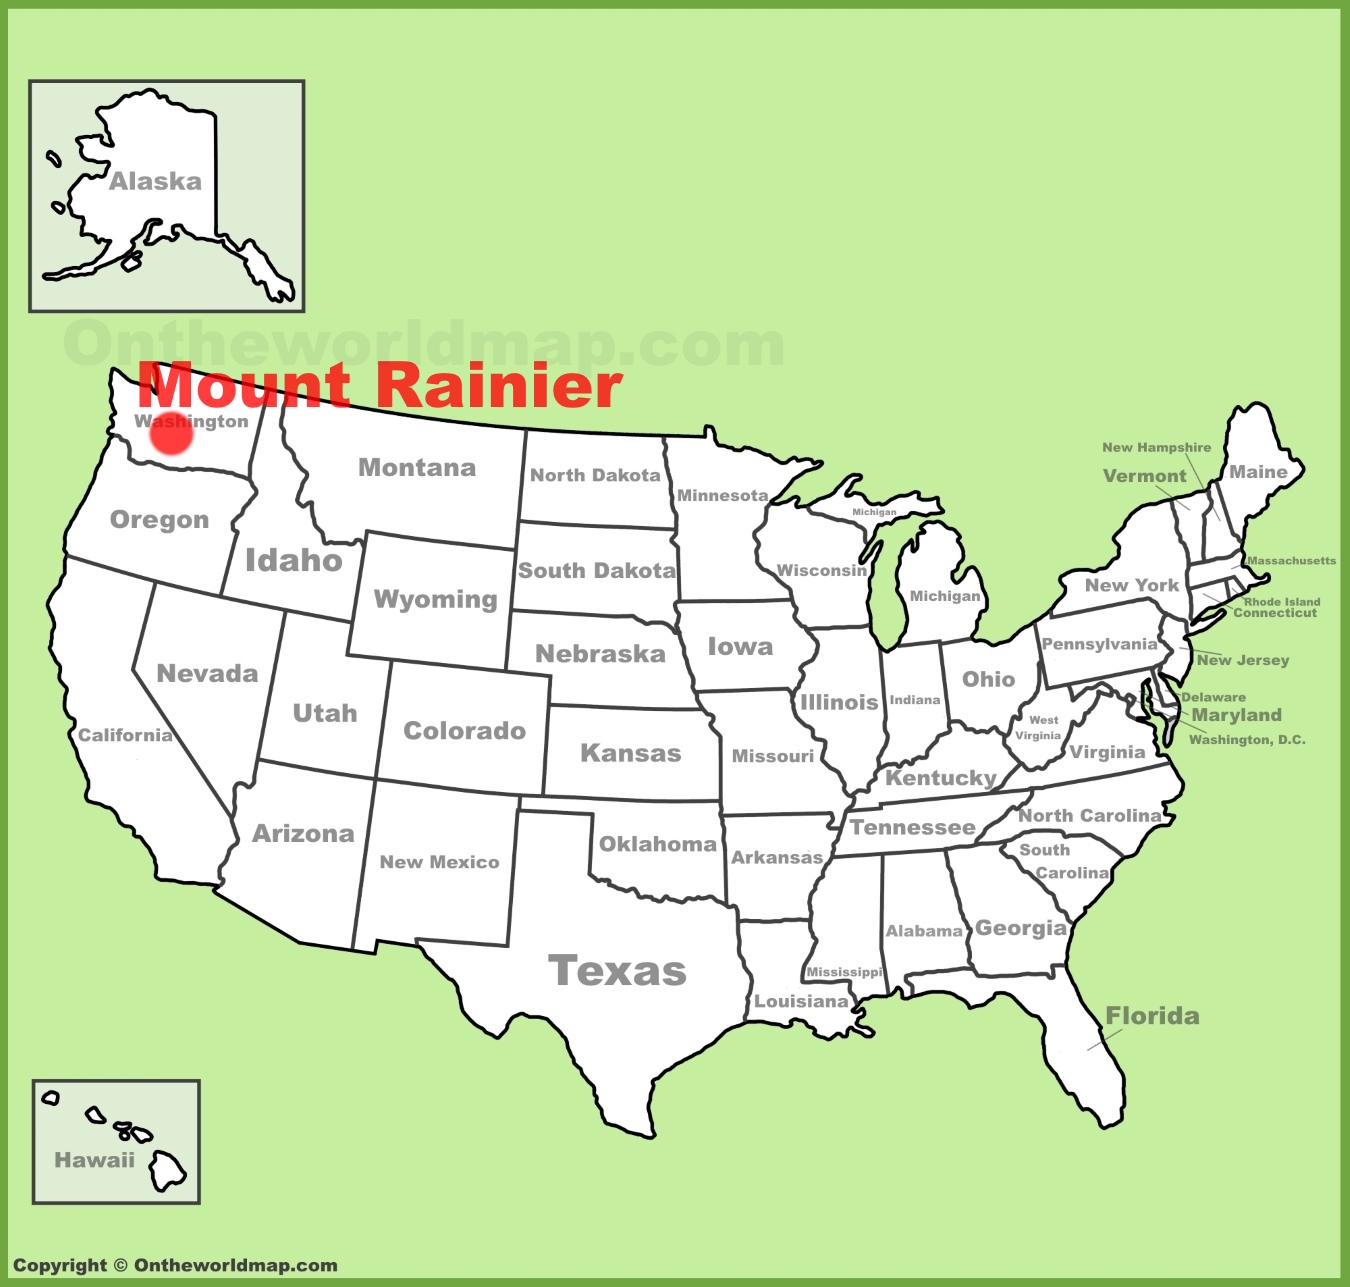 Mount Rainier location on the U.S. Map